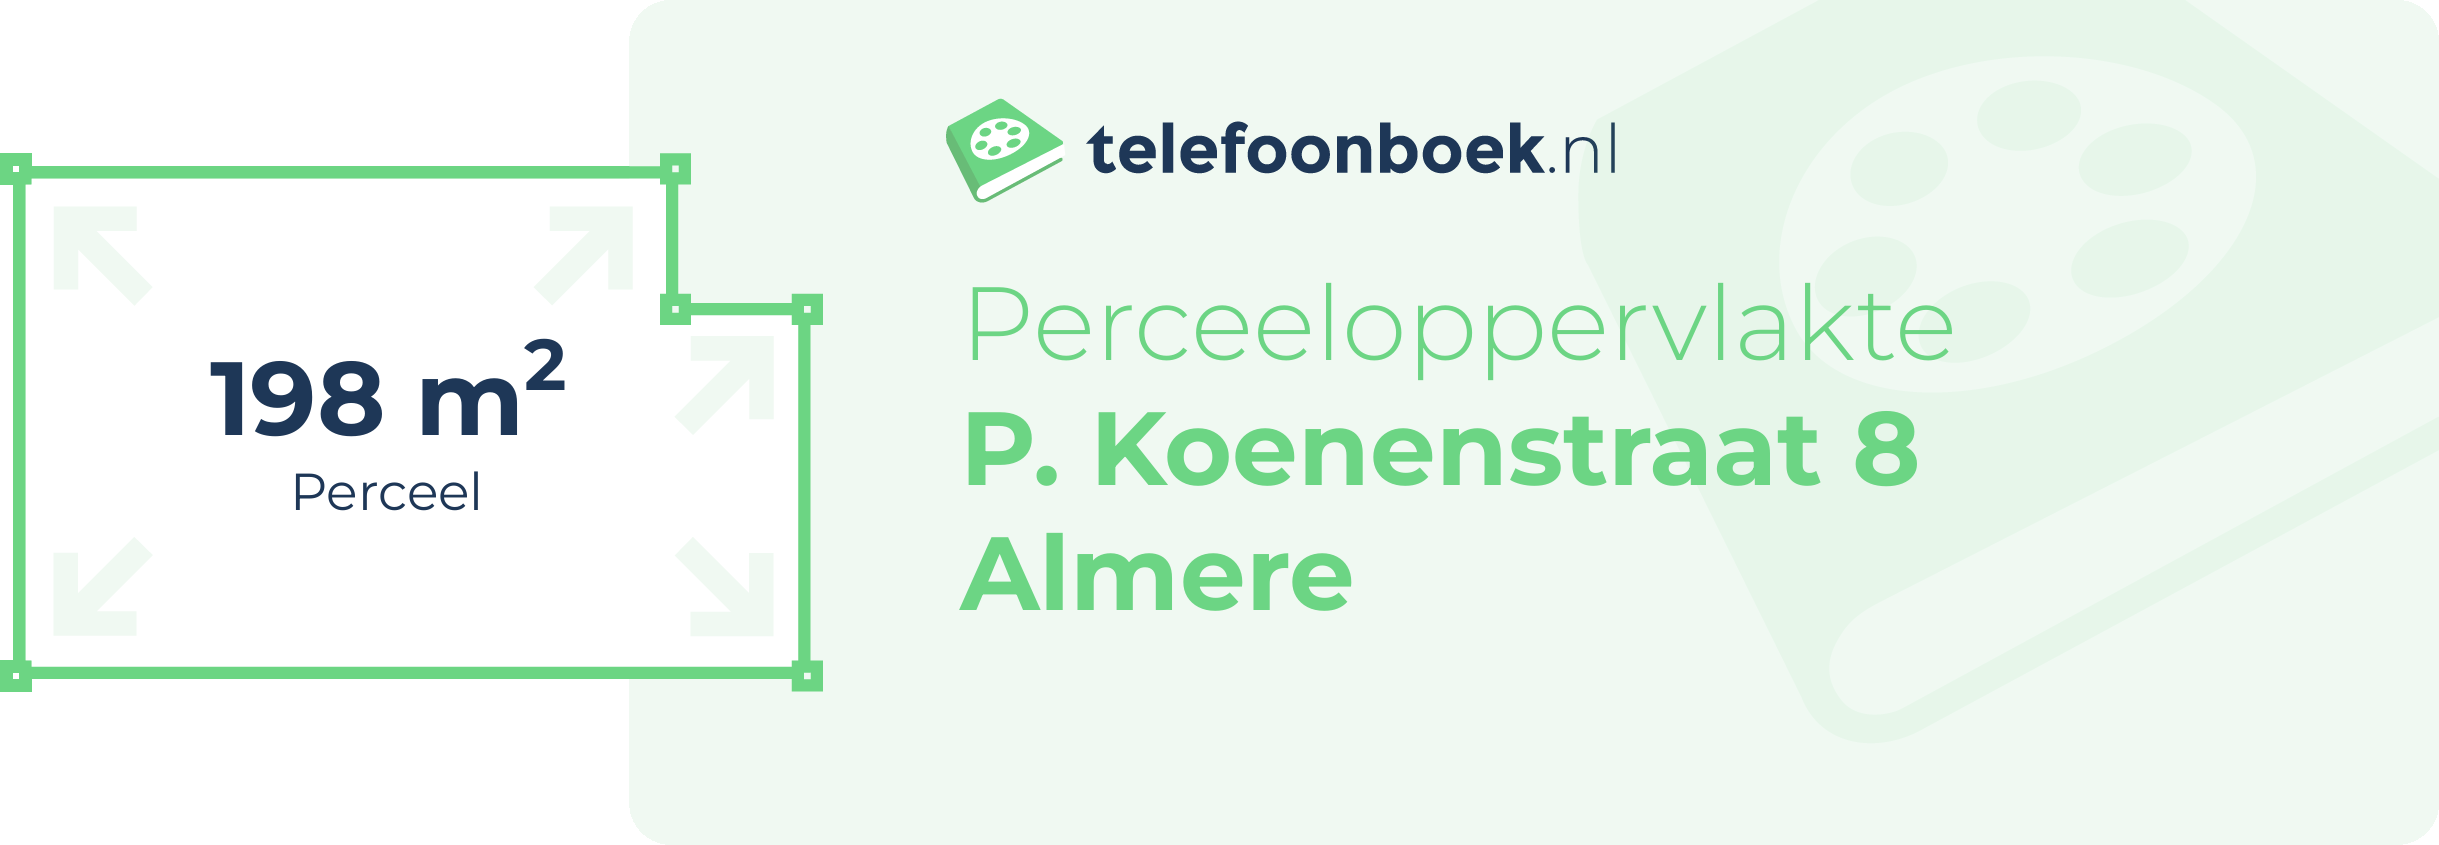 Perceeloppervlakte P. Koenenstraat 8 Almere